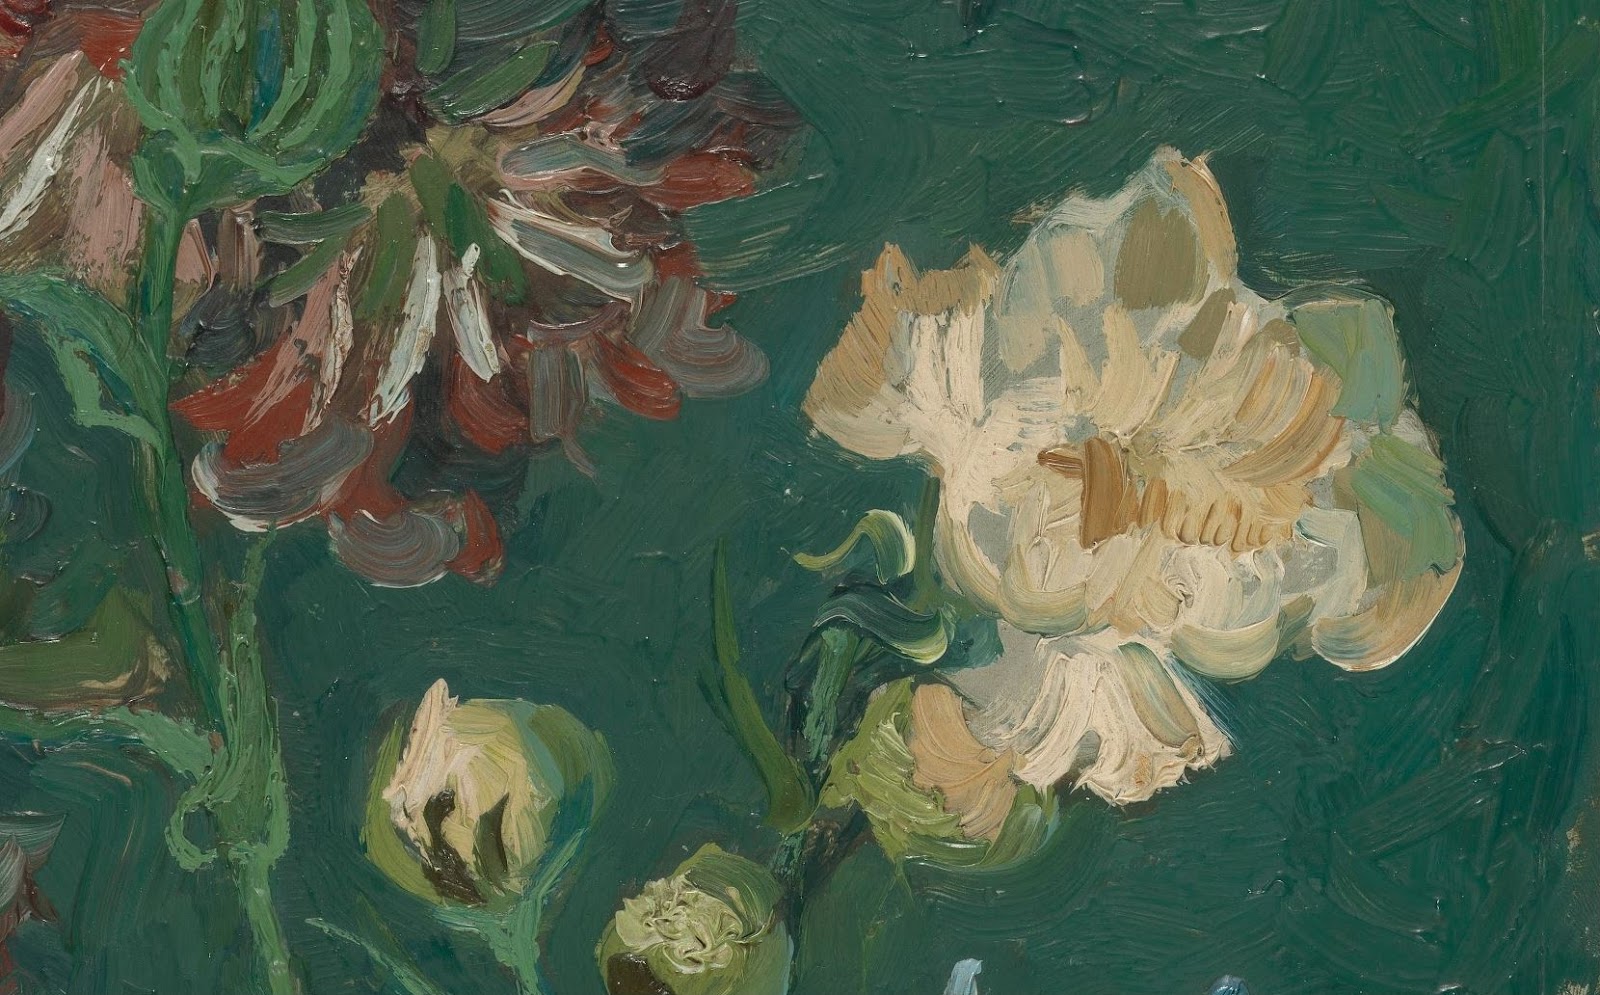 Vincent+Van+Gogh-1853-1890 (467).JPG